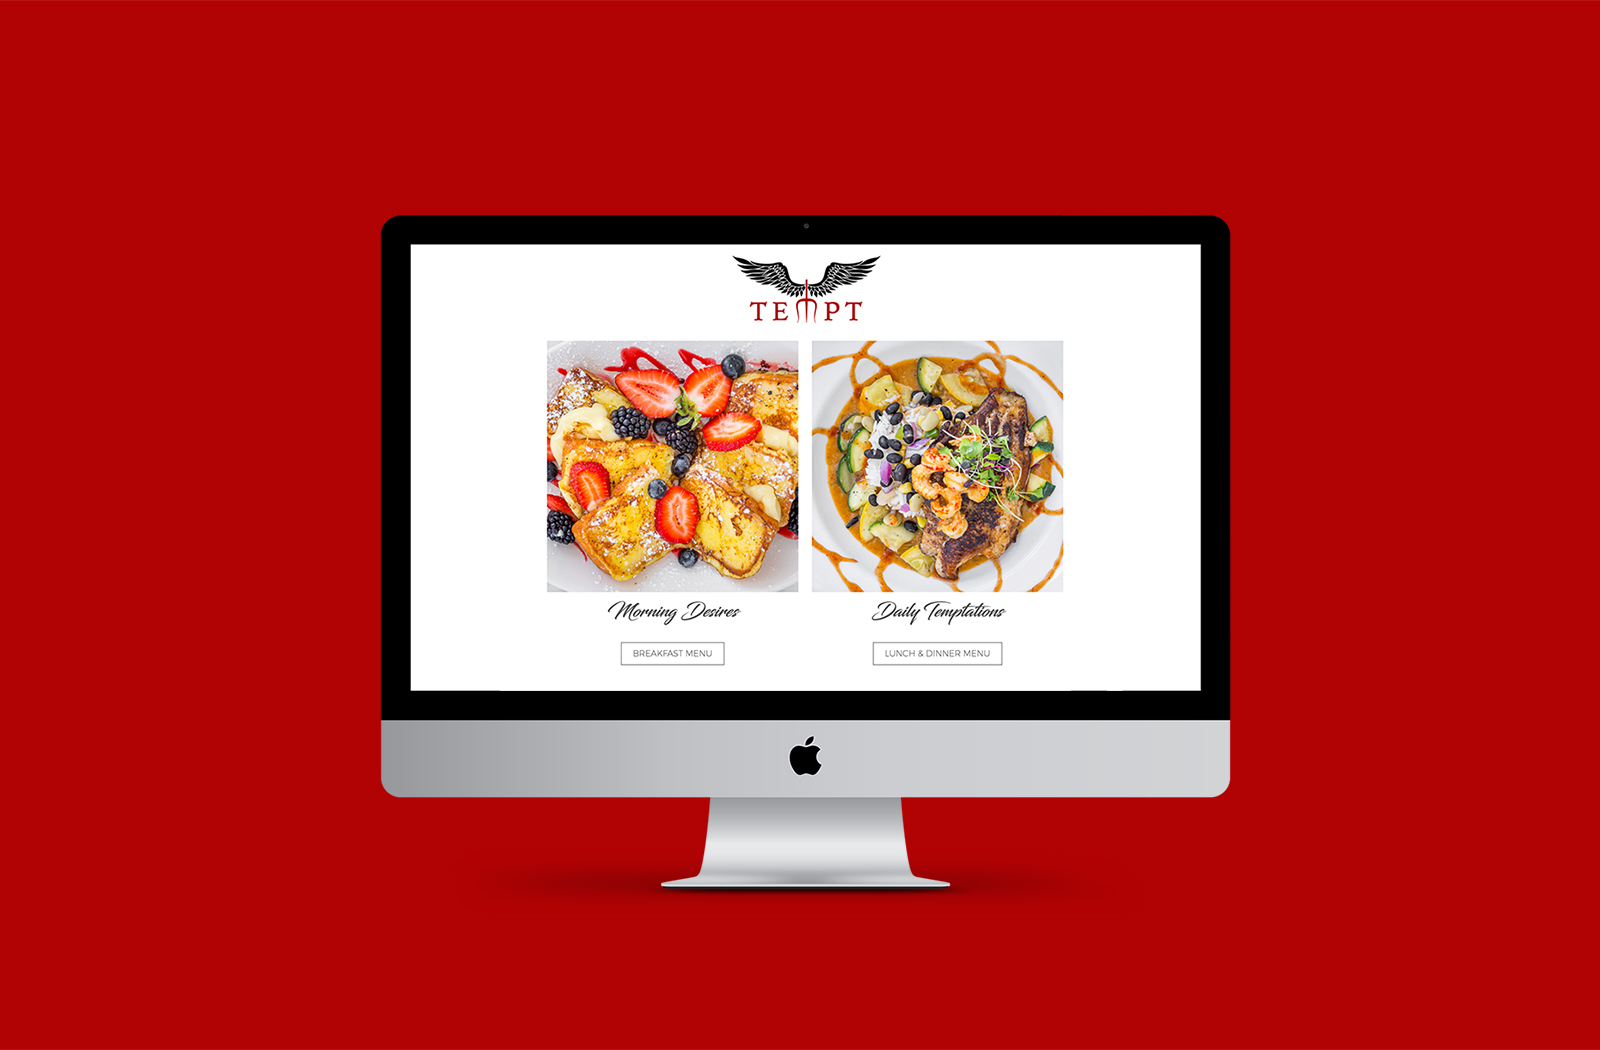 Web Design, Brand Development & Professional Photography for Restaurants - Tempt - Palm Island Creative